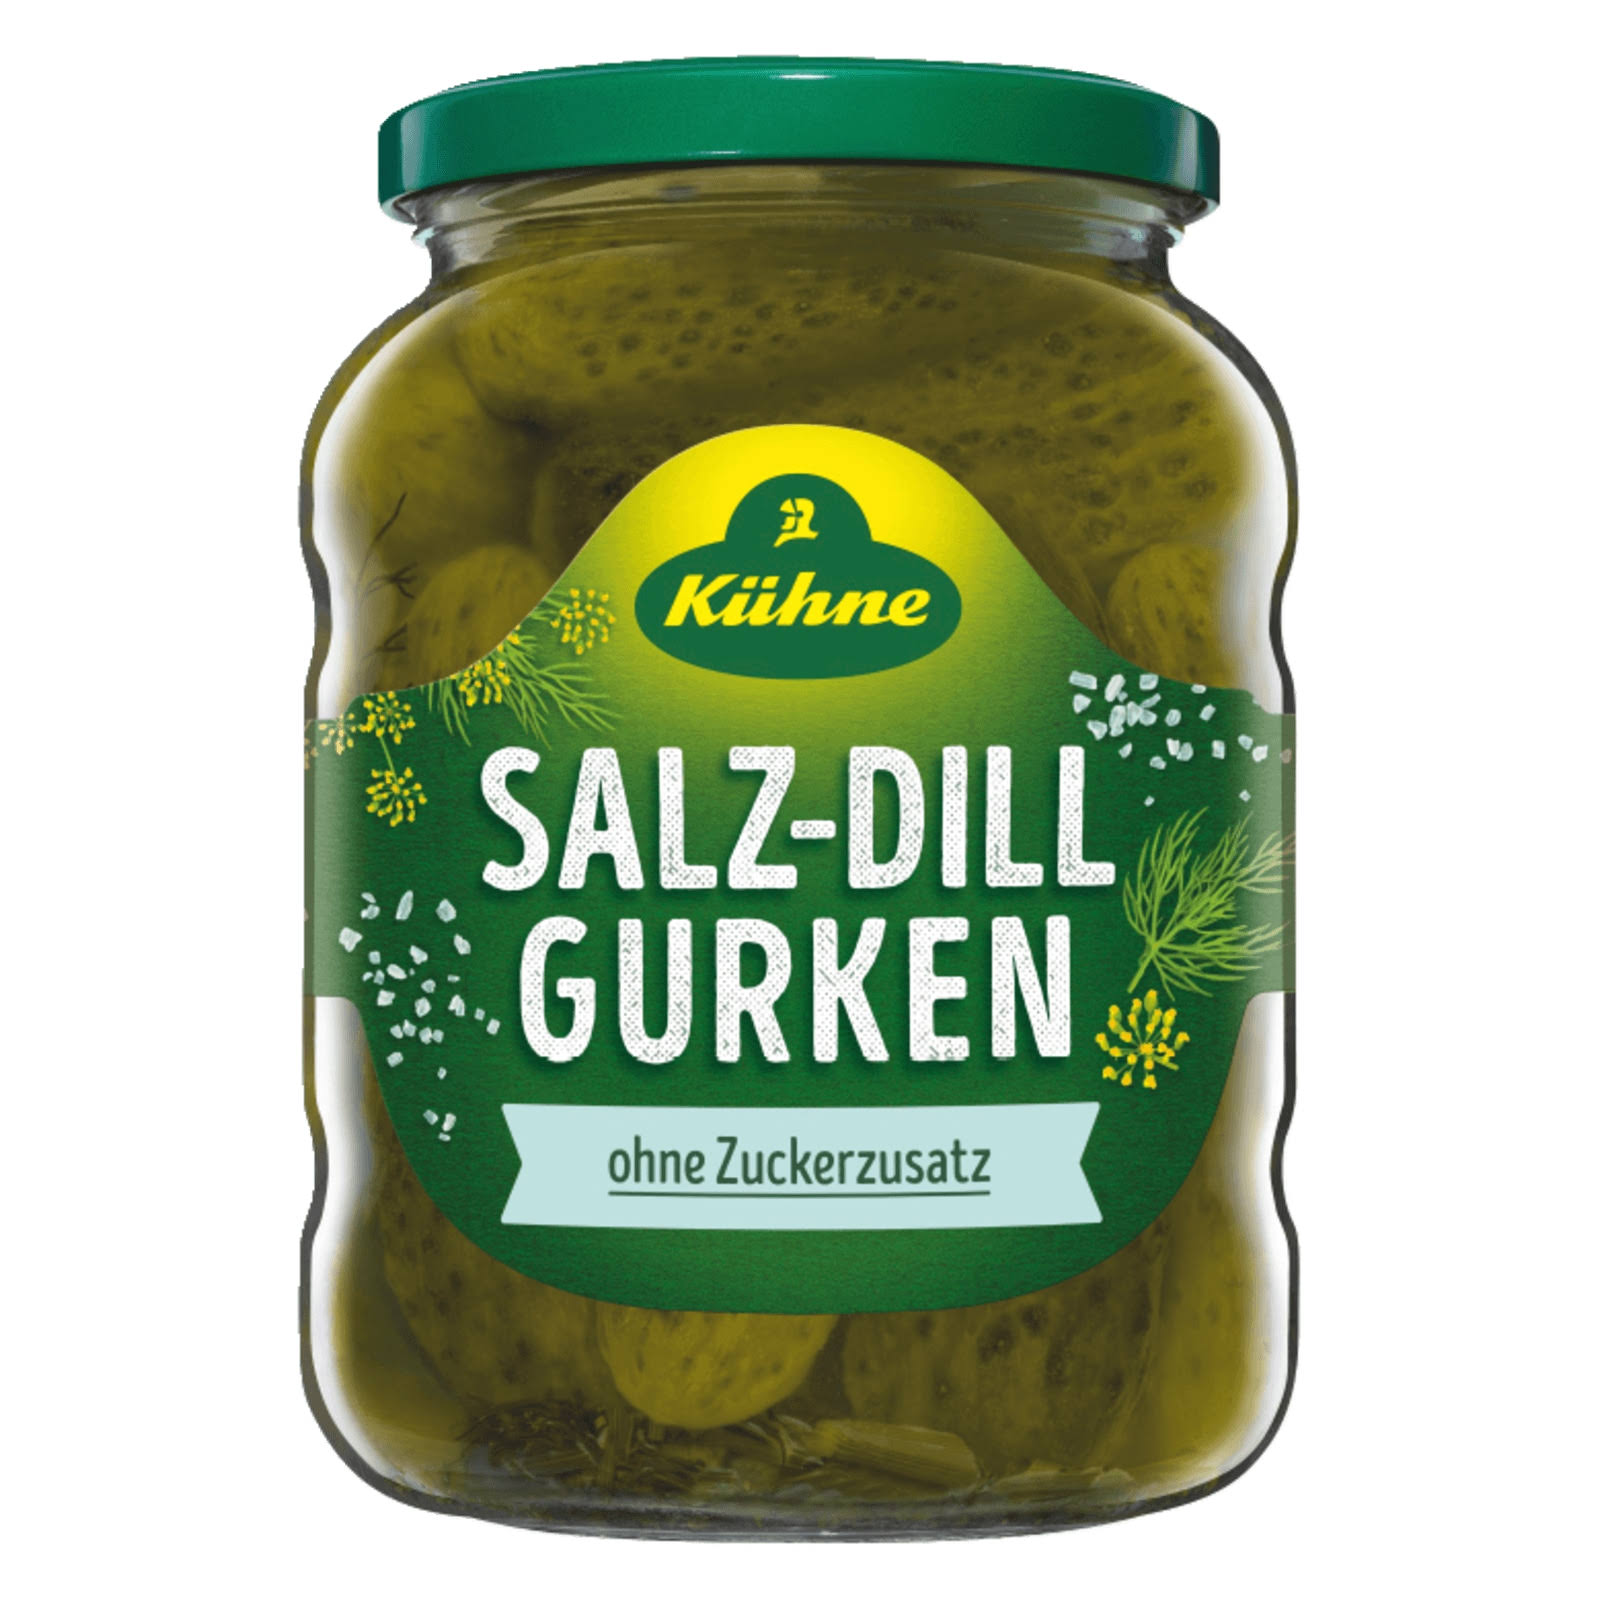 Kühne Salz-Dill Gurken 650g (23oz)